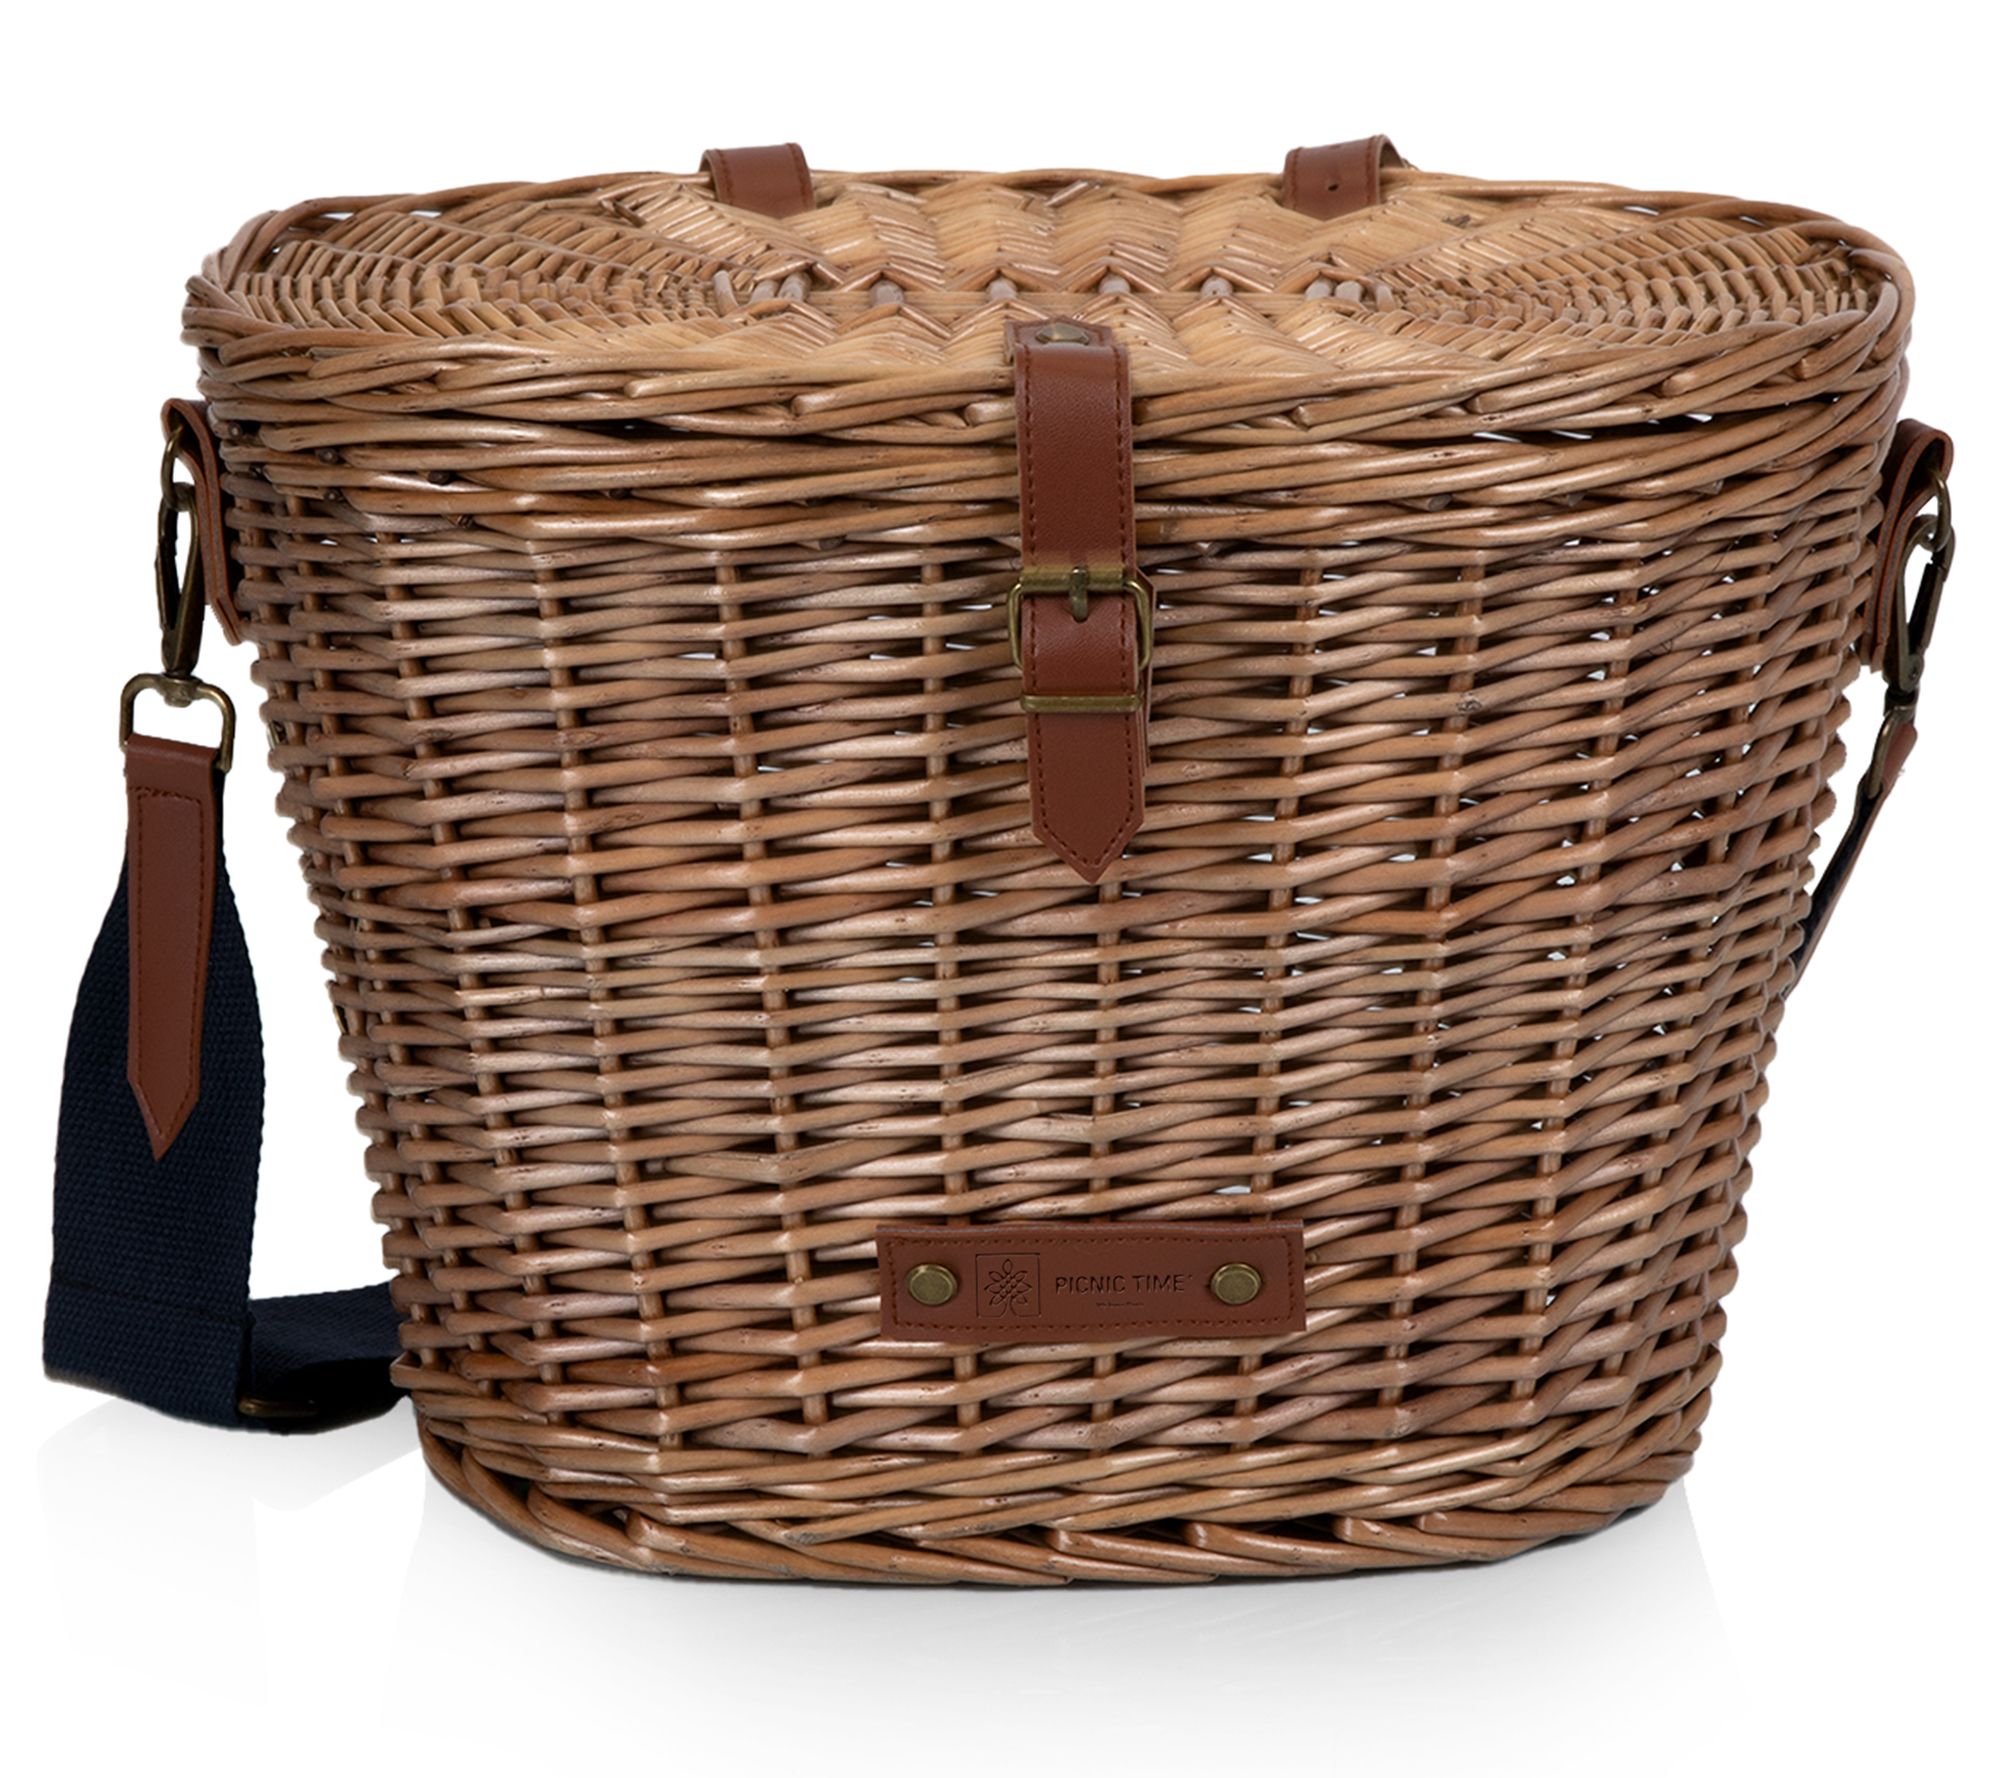 Picnic Time canasta Wicker Basket